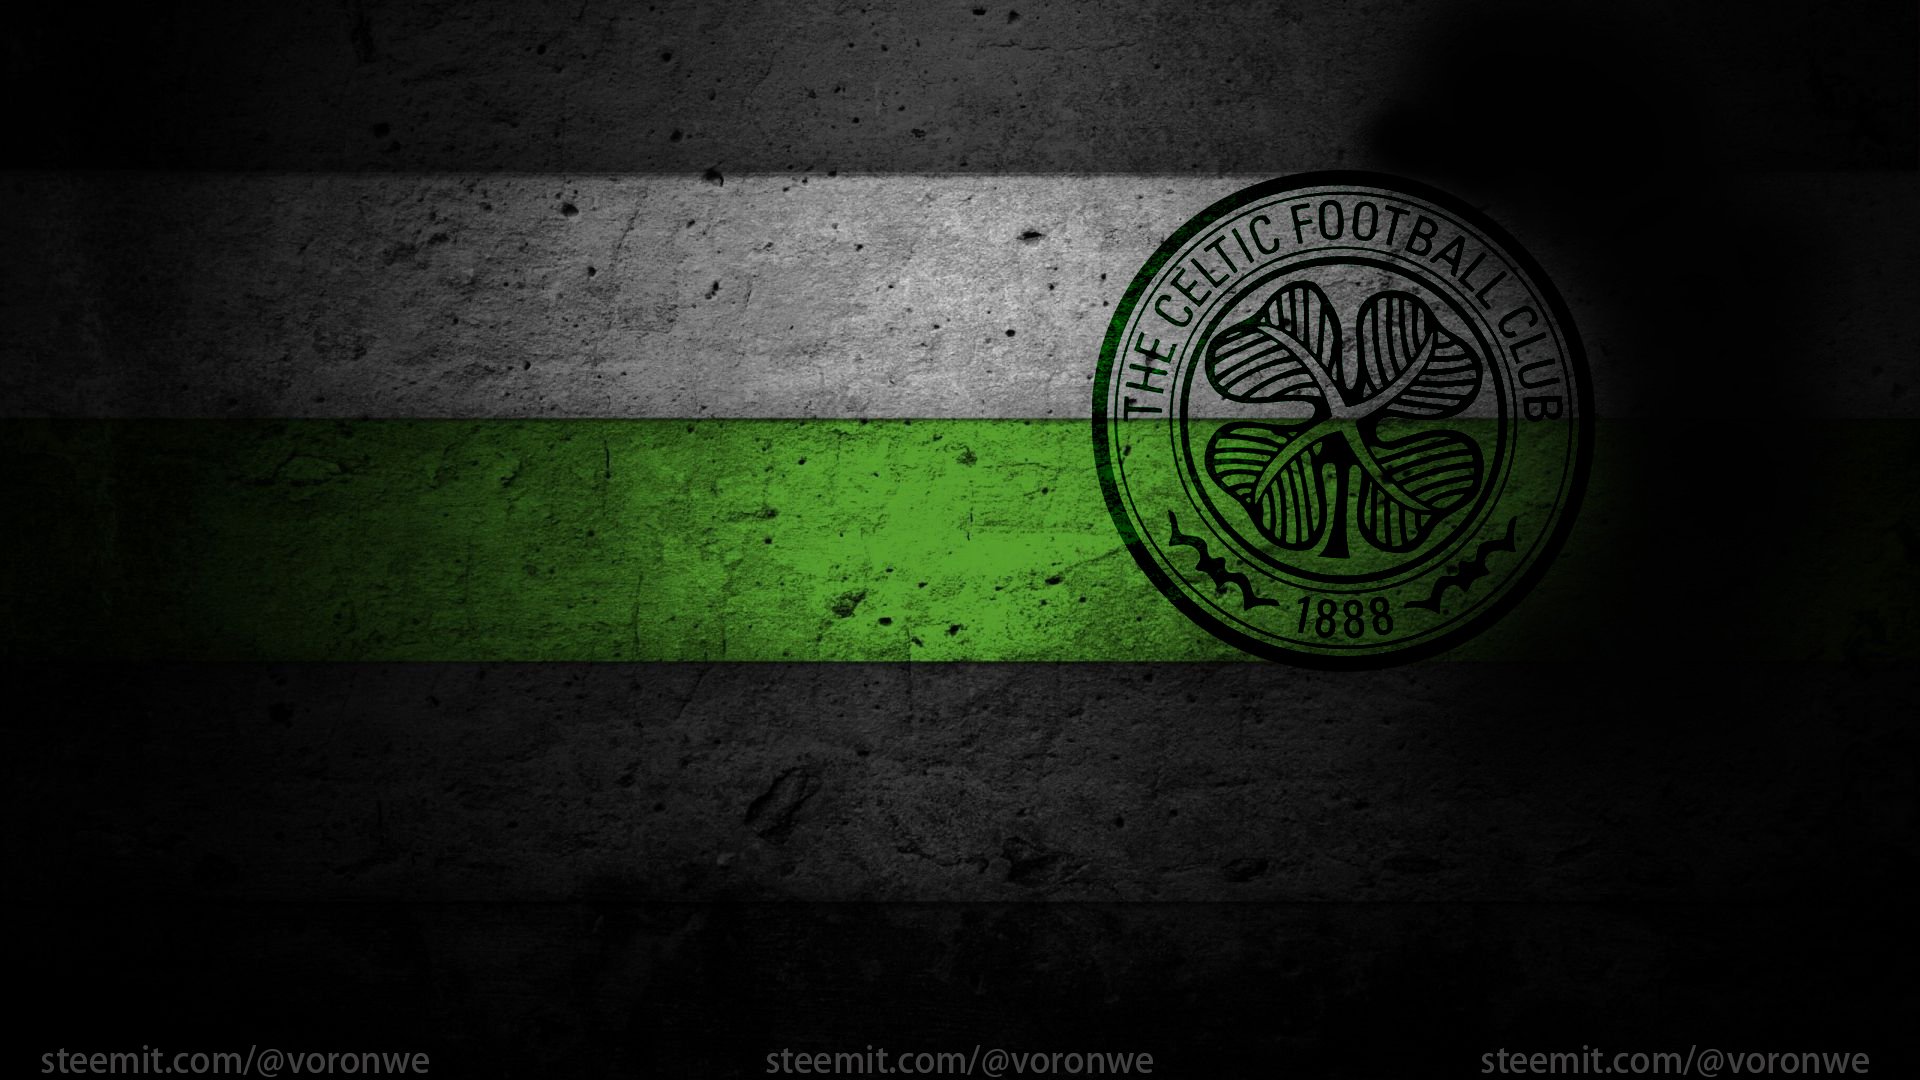 Soccer Clubs Football Glasgow Celtic Glasgow Digital Art Watermarked Low Light 1920x1080